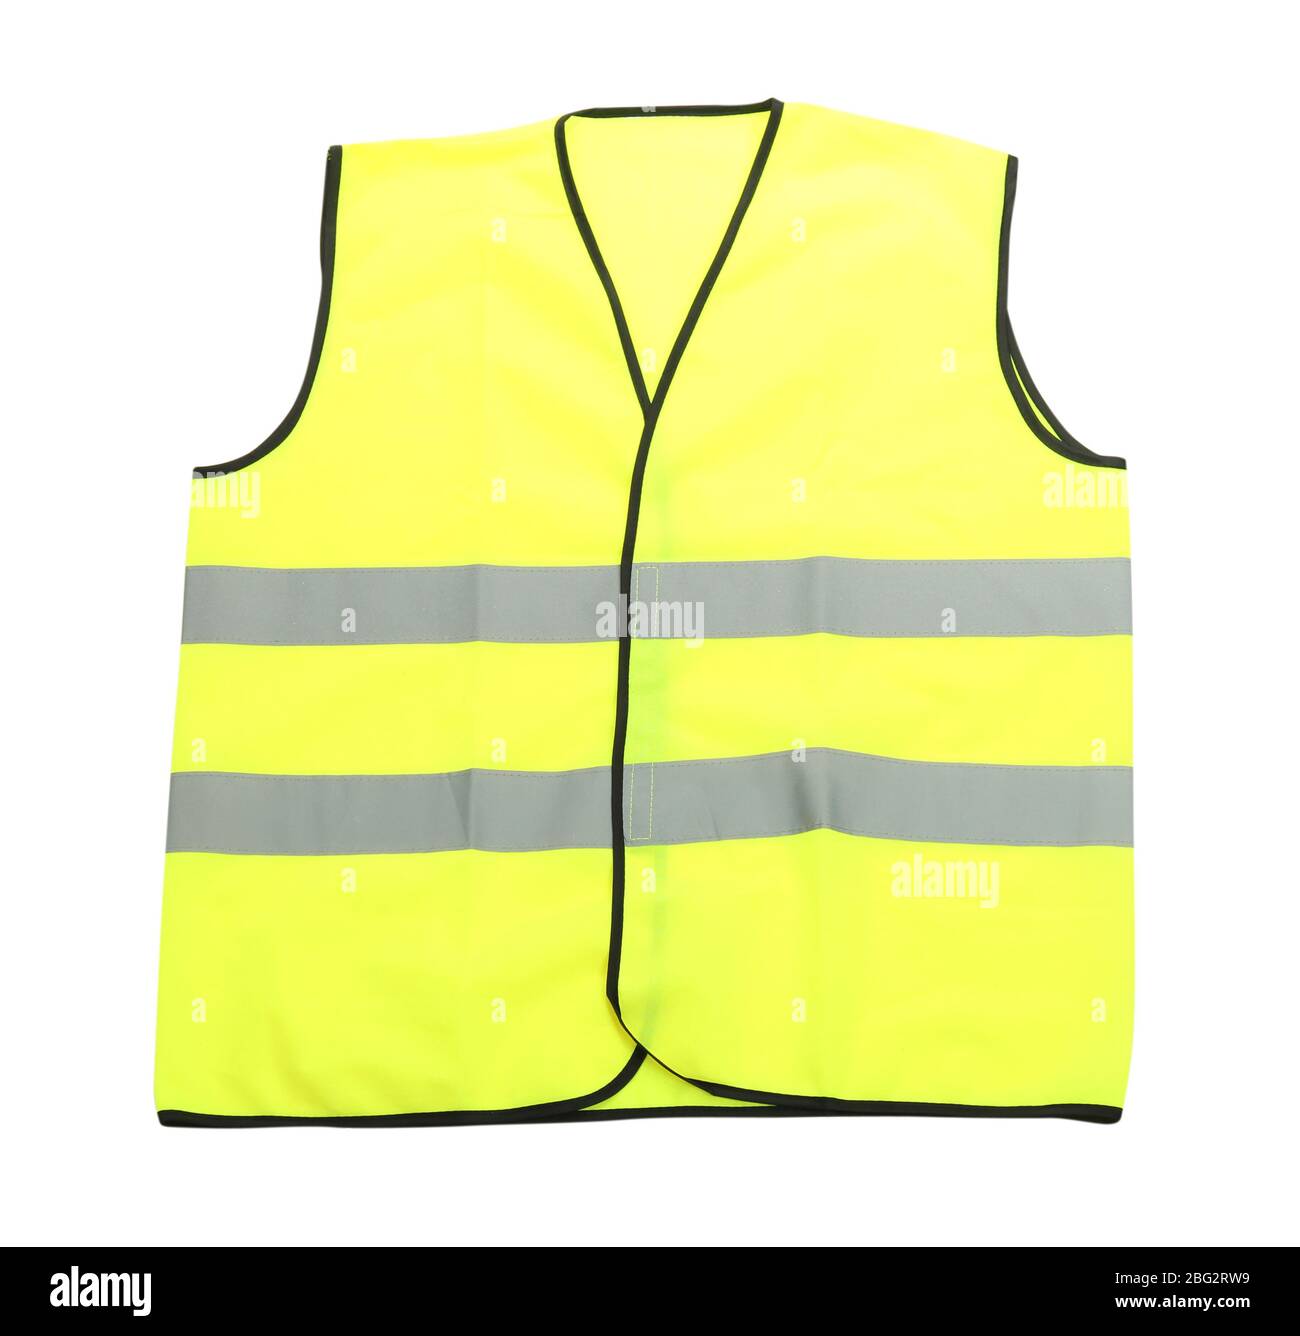 Yellow vest, isolated on black Stock Photo - Alamy